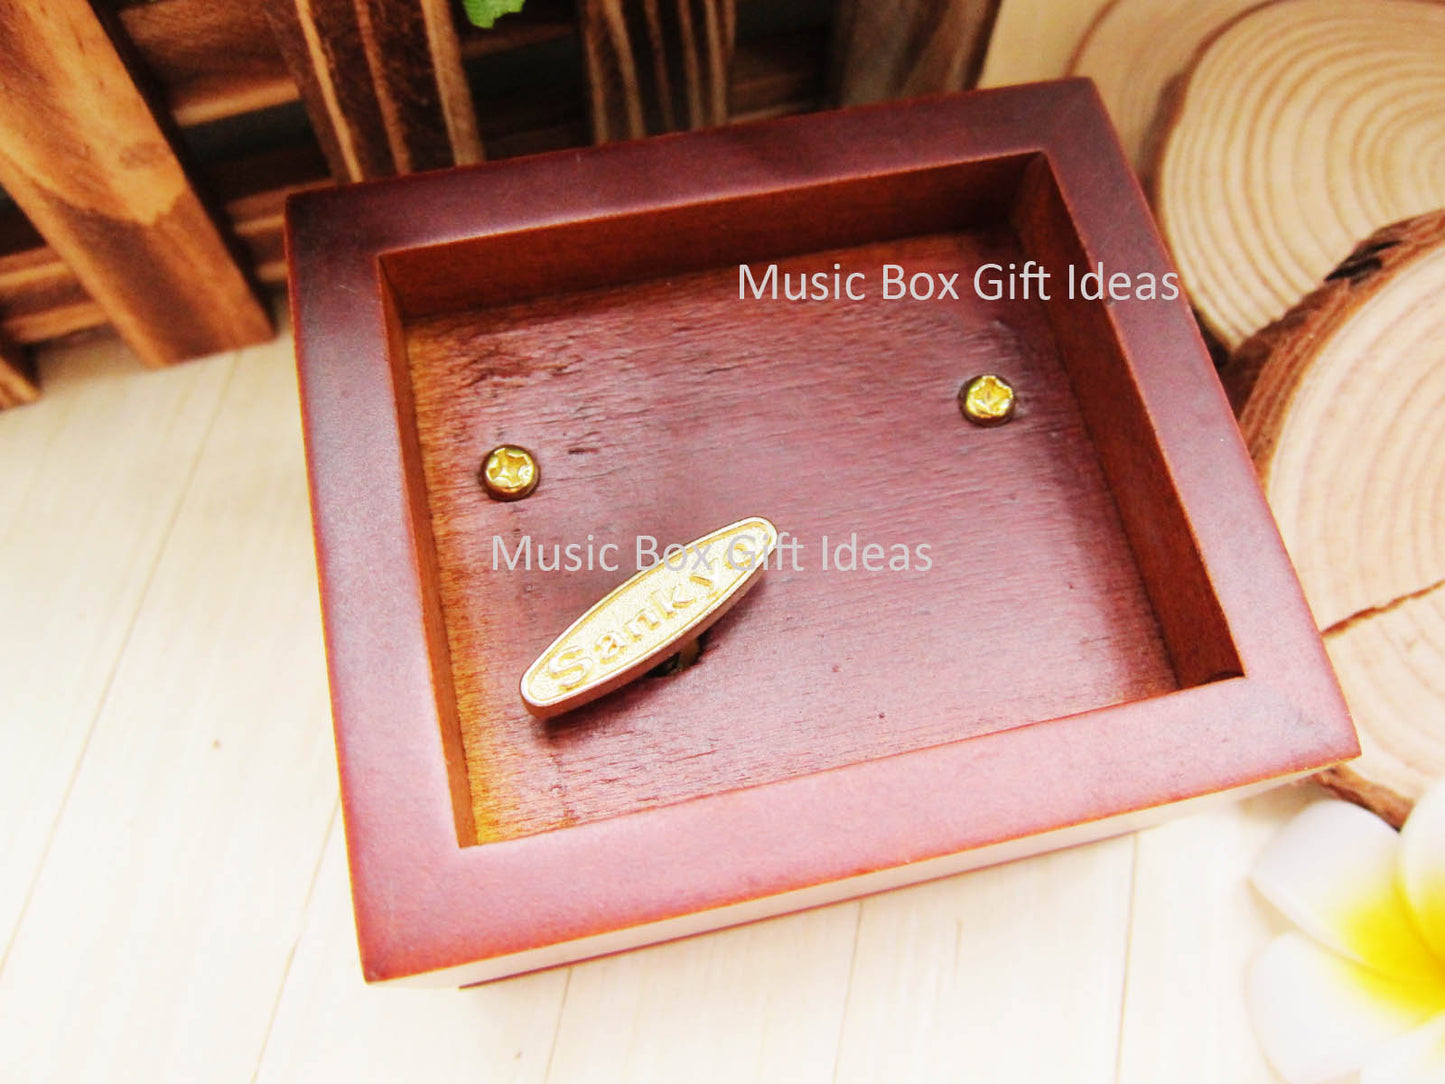 Breakfast at Tiffany's Soundtrack Moon River Audrey Hepburn 18-Note Music Box Gift (Wooden Clockwork) - Music Box Gift Ideas